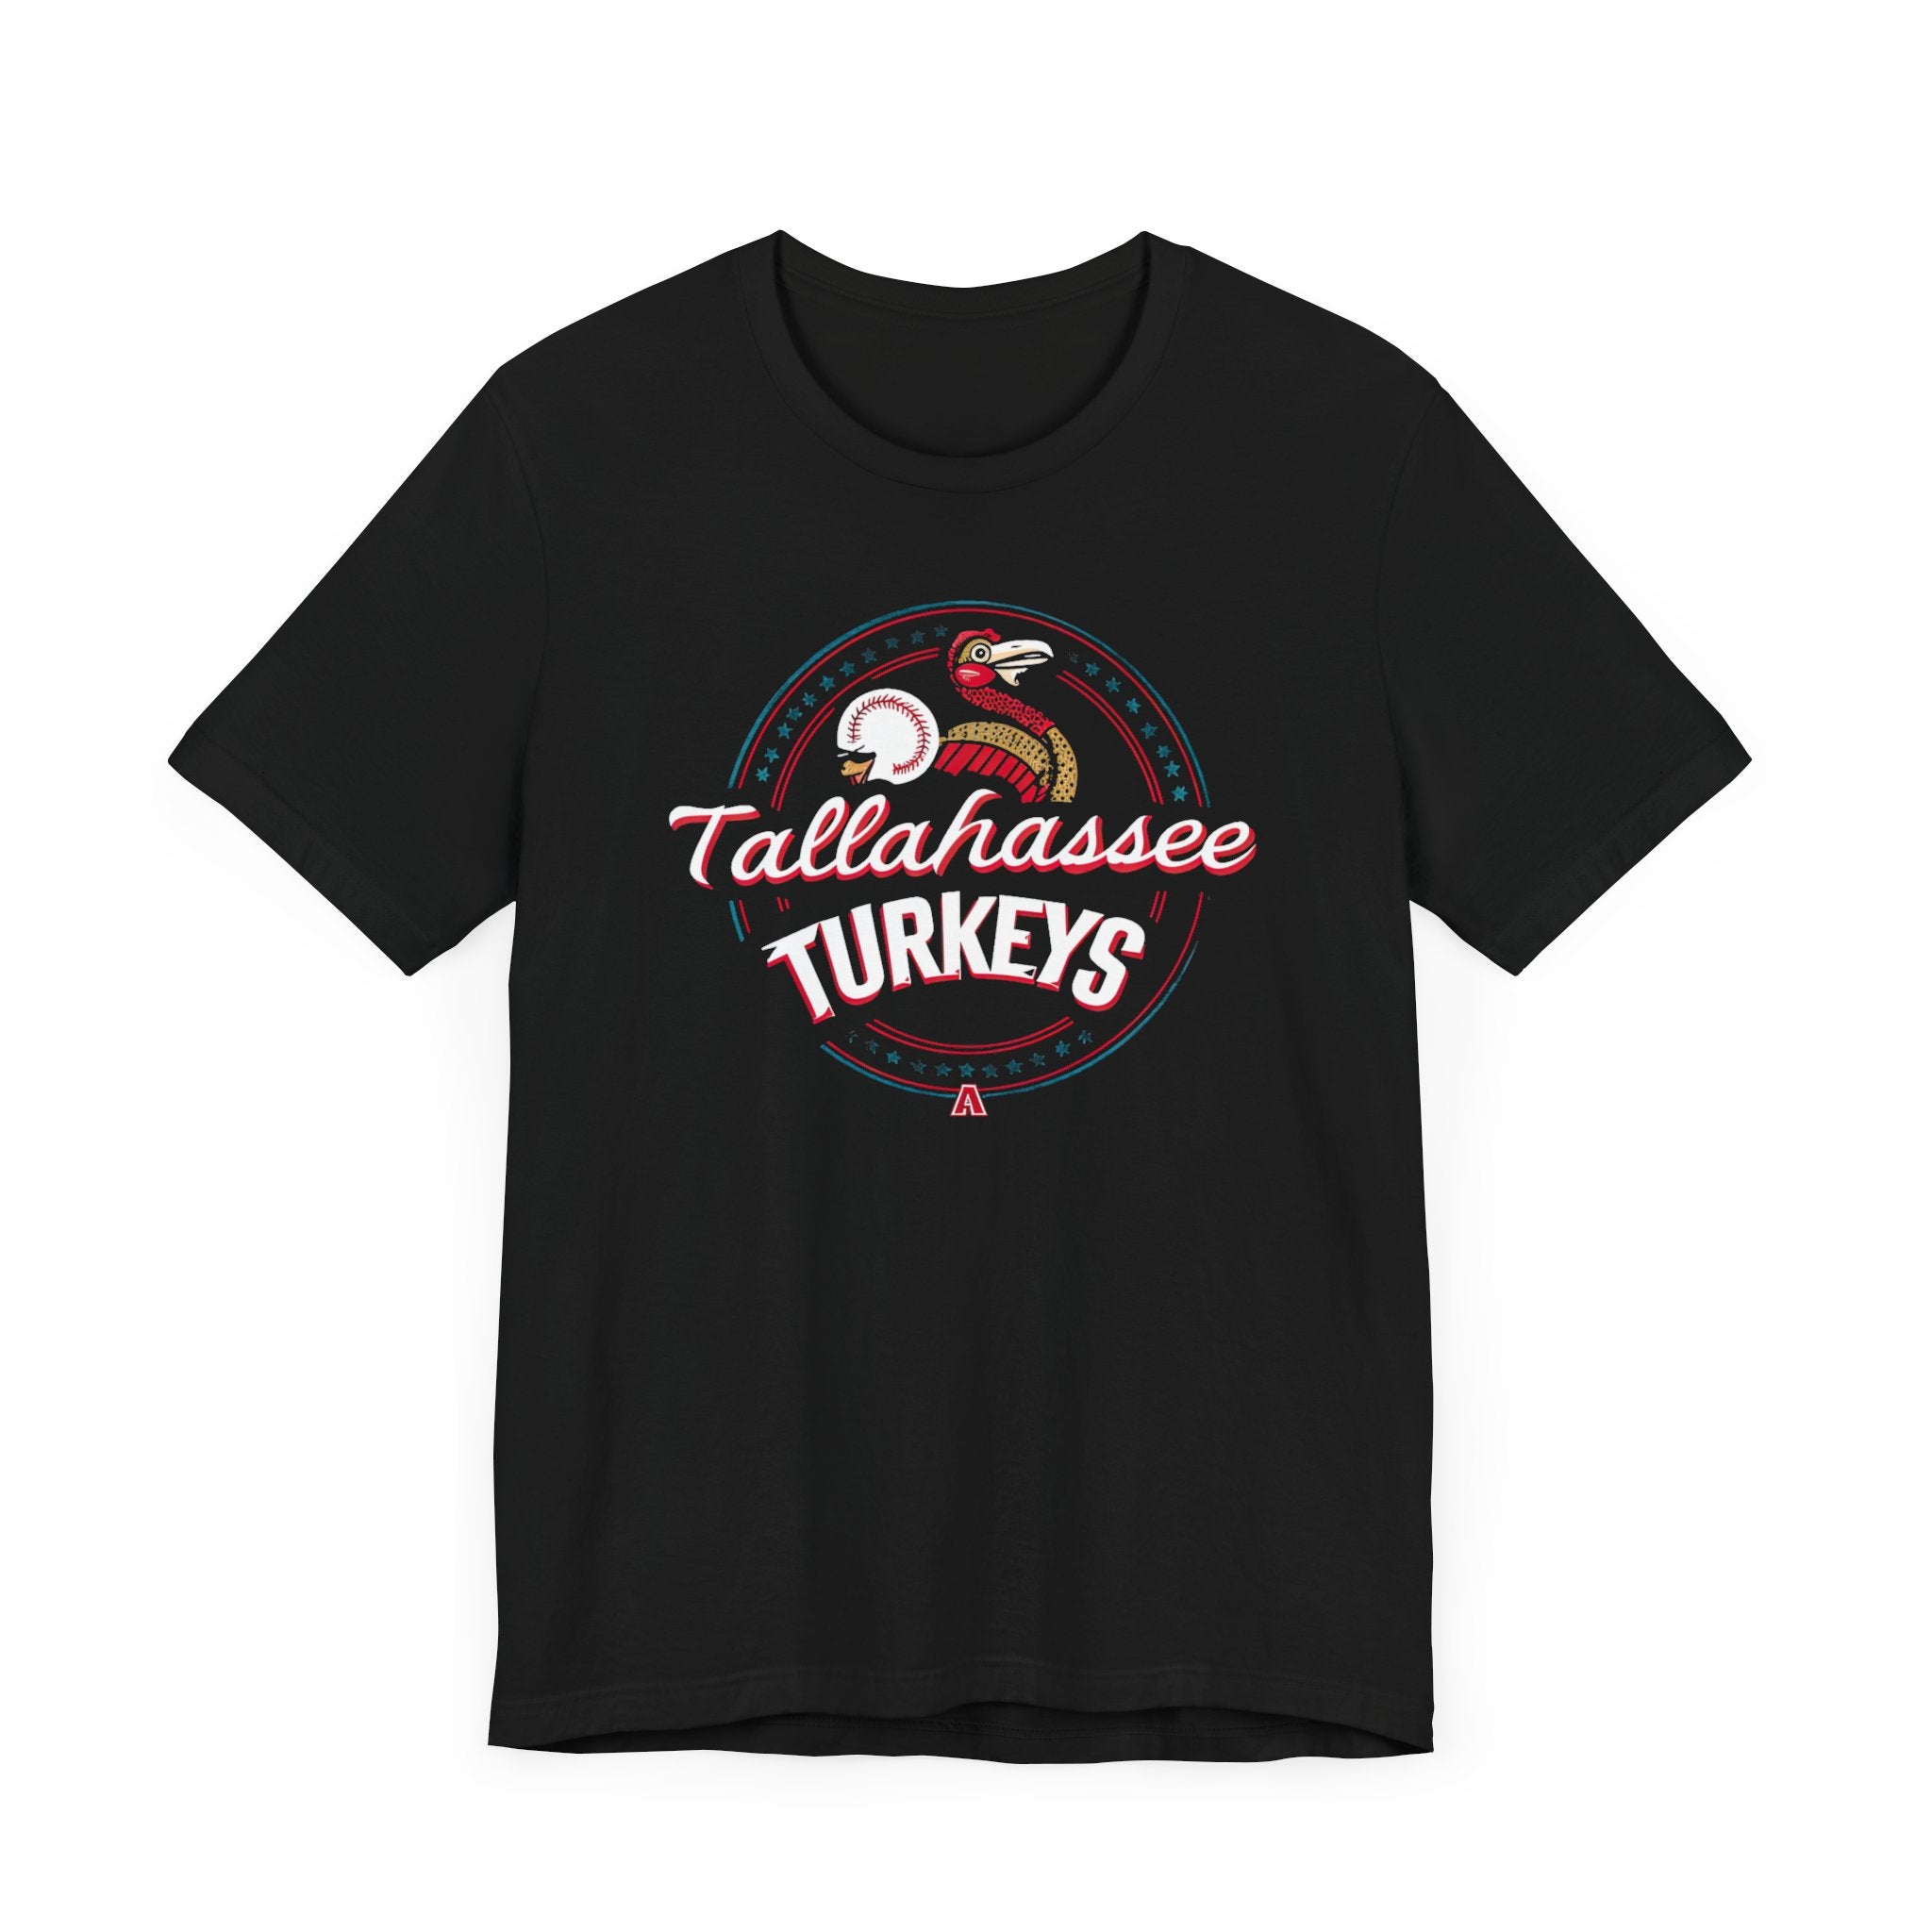 Tallahassee Turkeys T-Shirt Baseball Team Graphic Tee